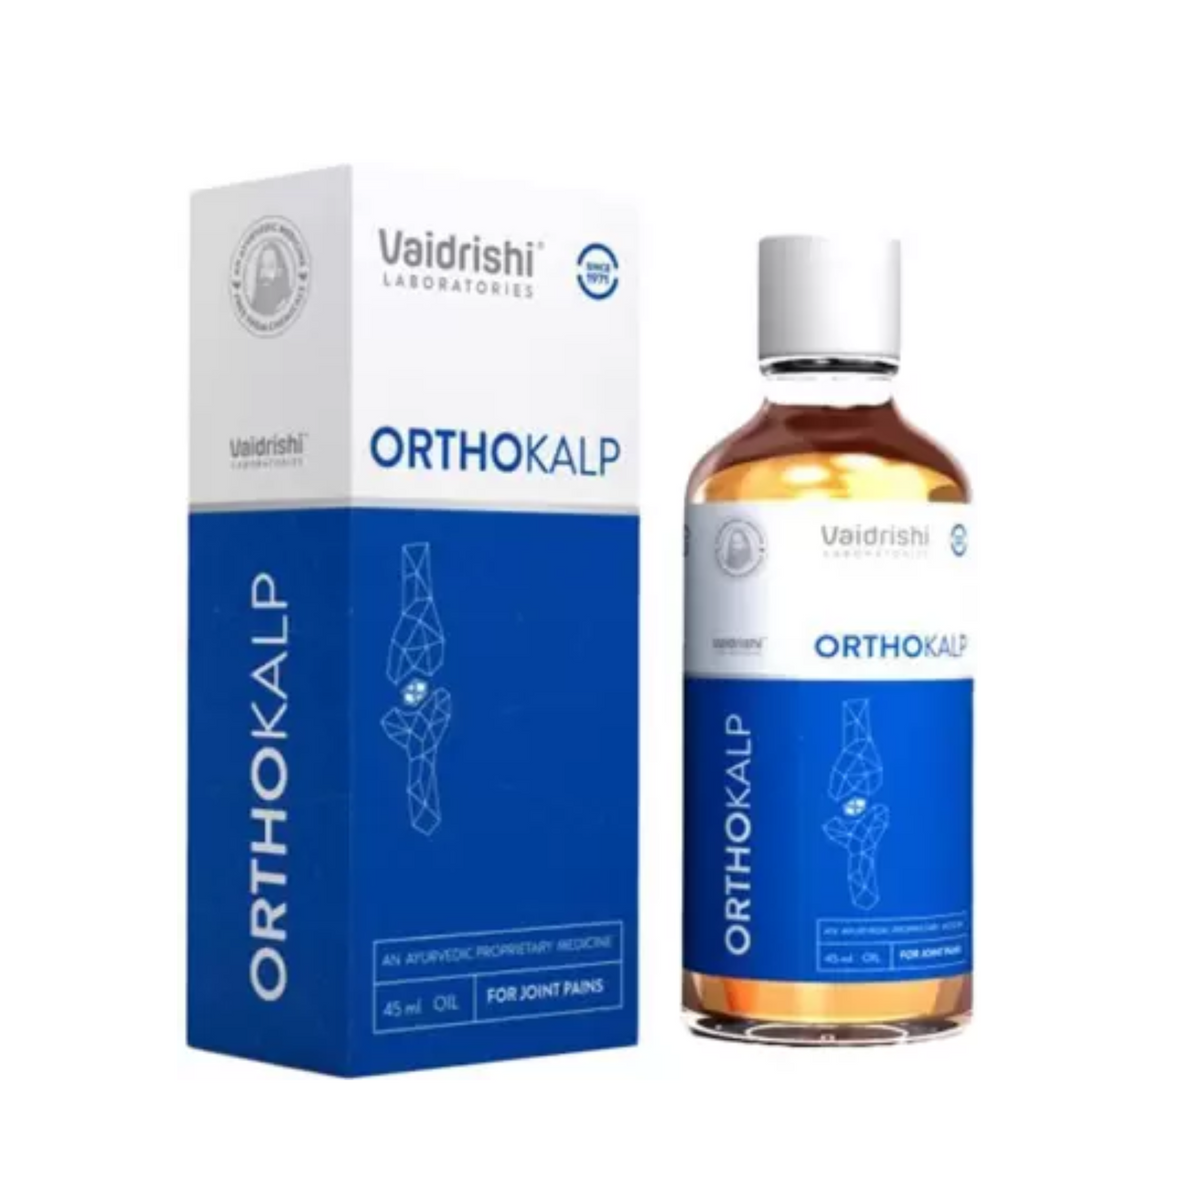 Vaidrishi OrthoKalp Oil - 80 ml